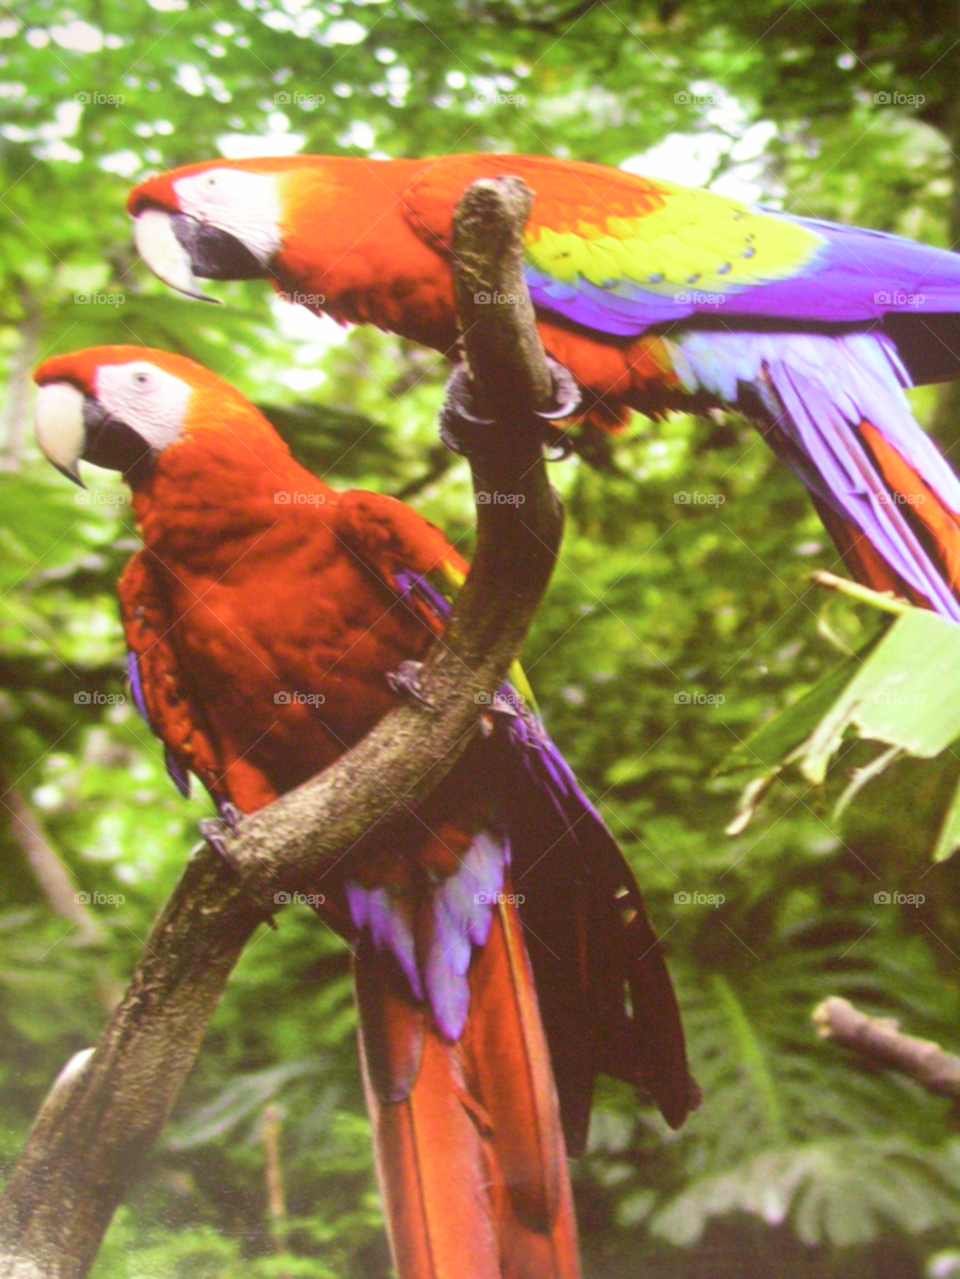 nature birds parrots tree by izabela.cib